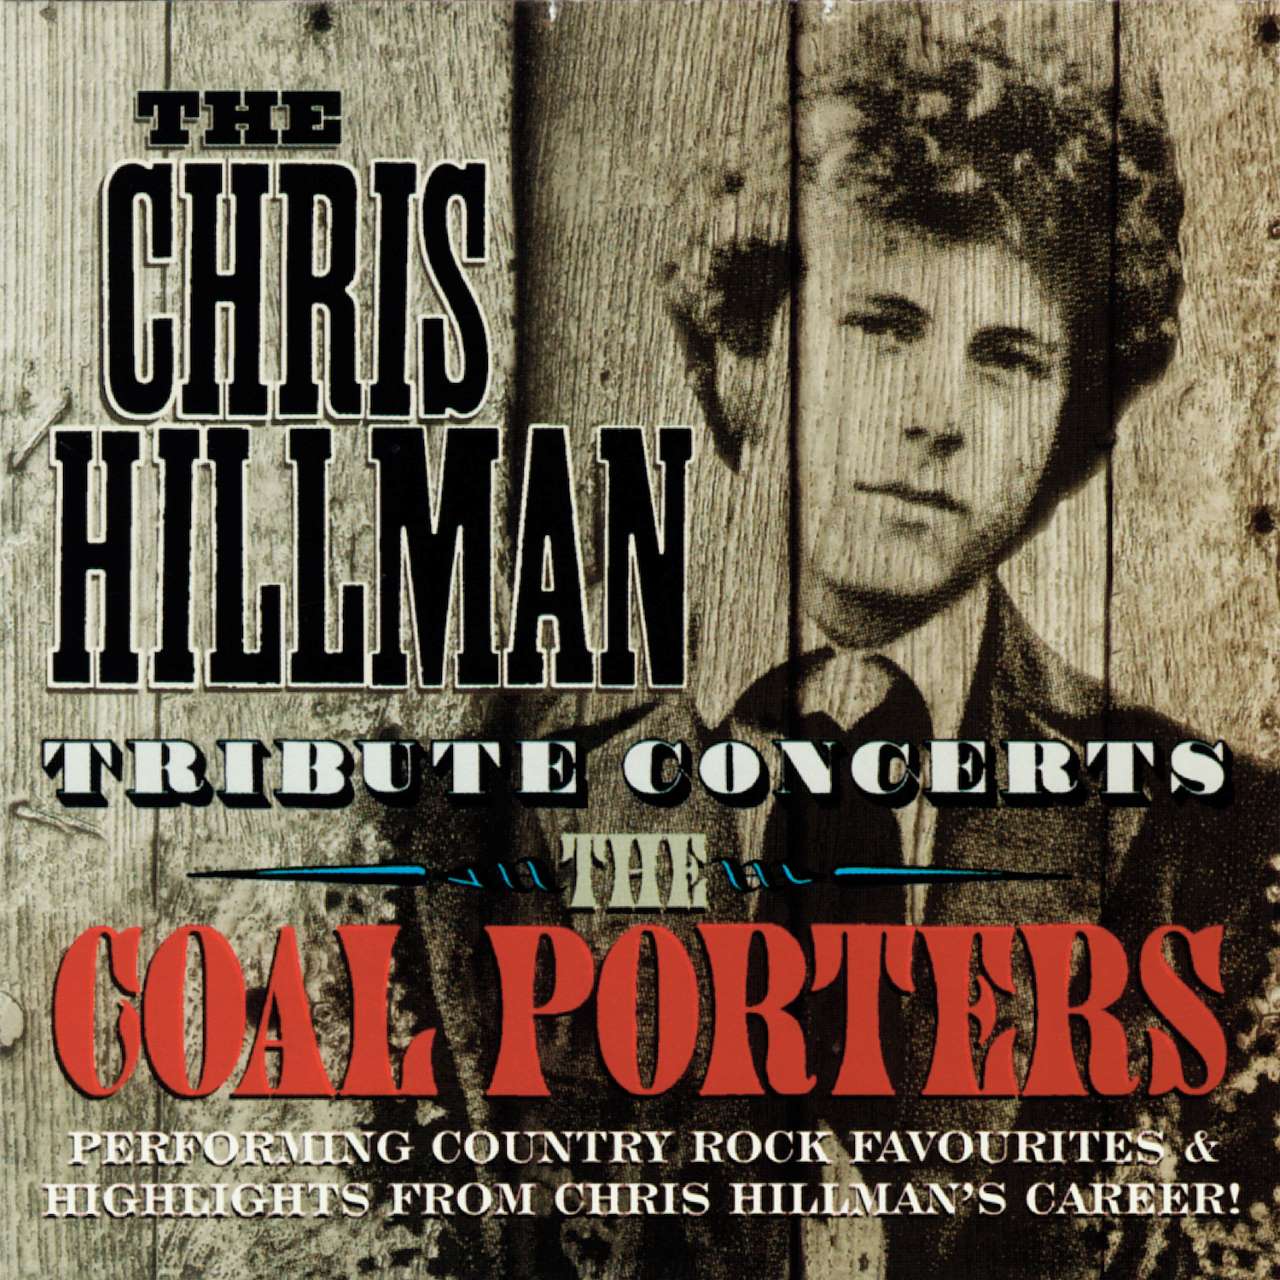 Coal Porters - The Chris Hillman Tribute Concert cover album